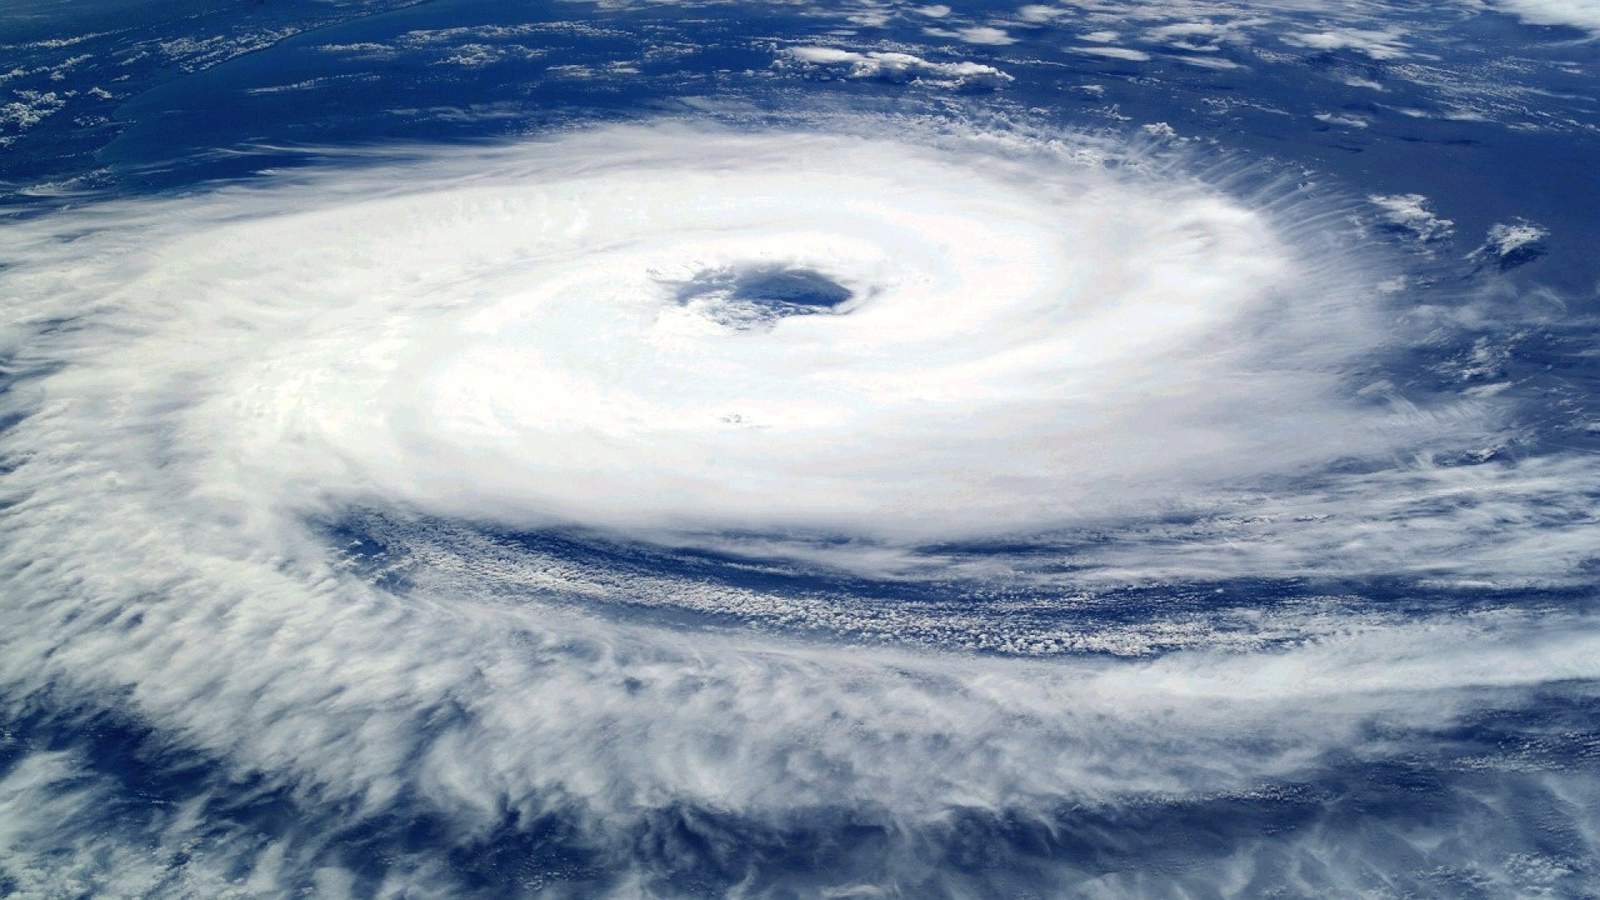 Hurricane seasons big question: Where will people fleeing storms go, amid coronavirus pandemic?